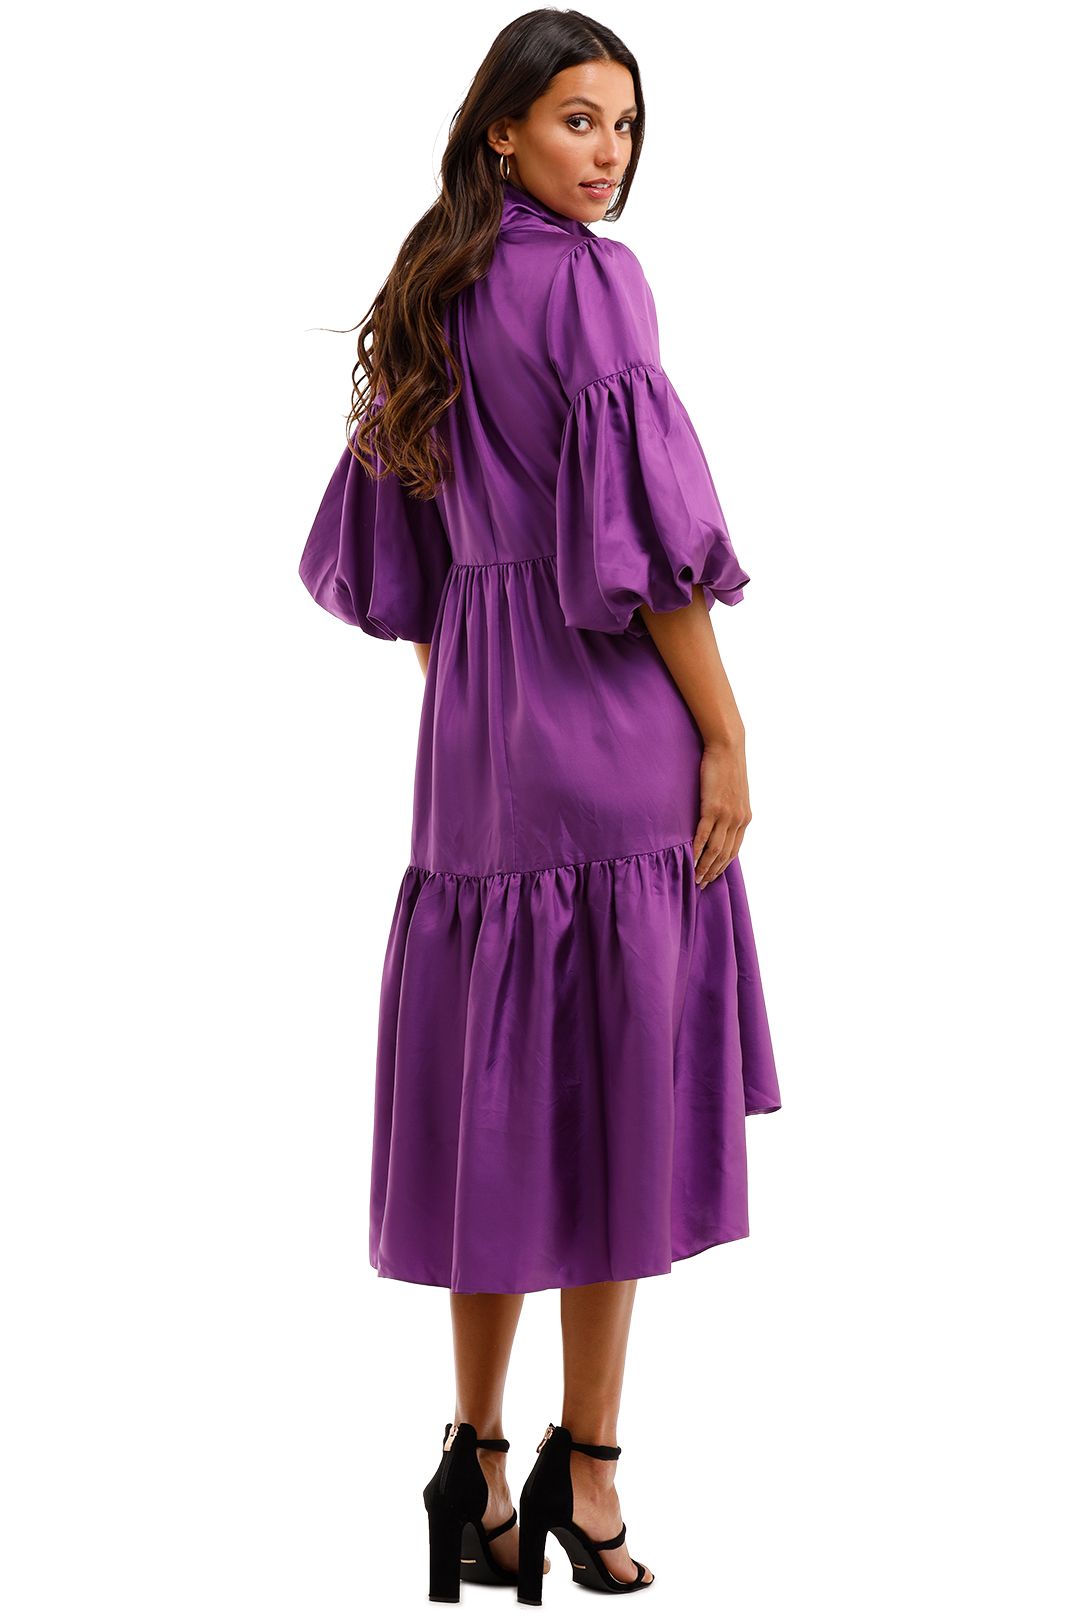 Husk Liberty Dress Violet Midi Length